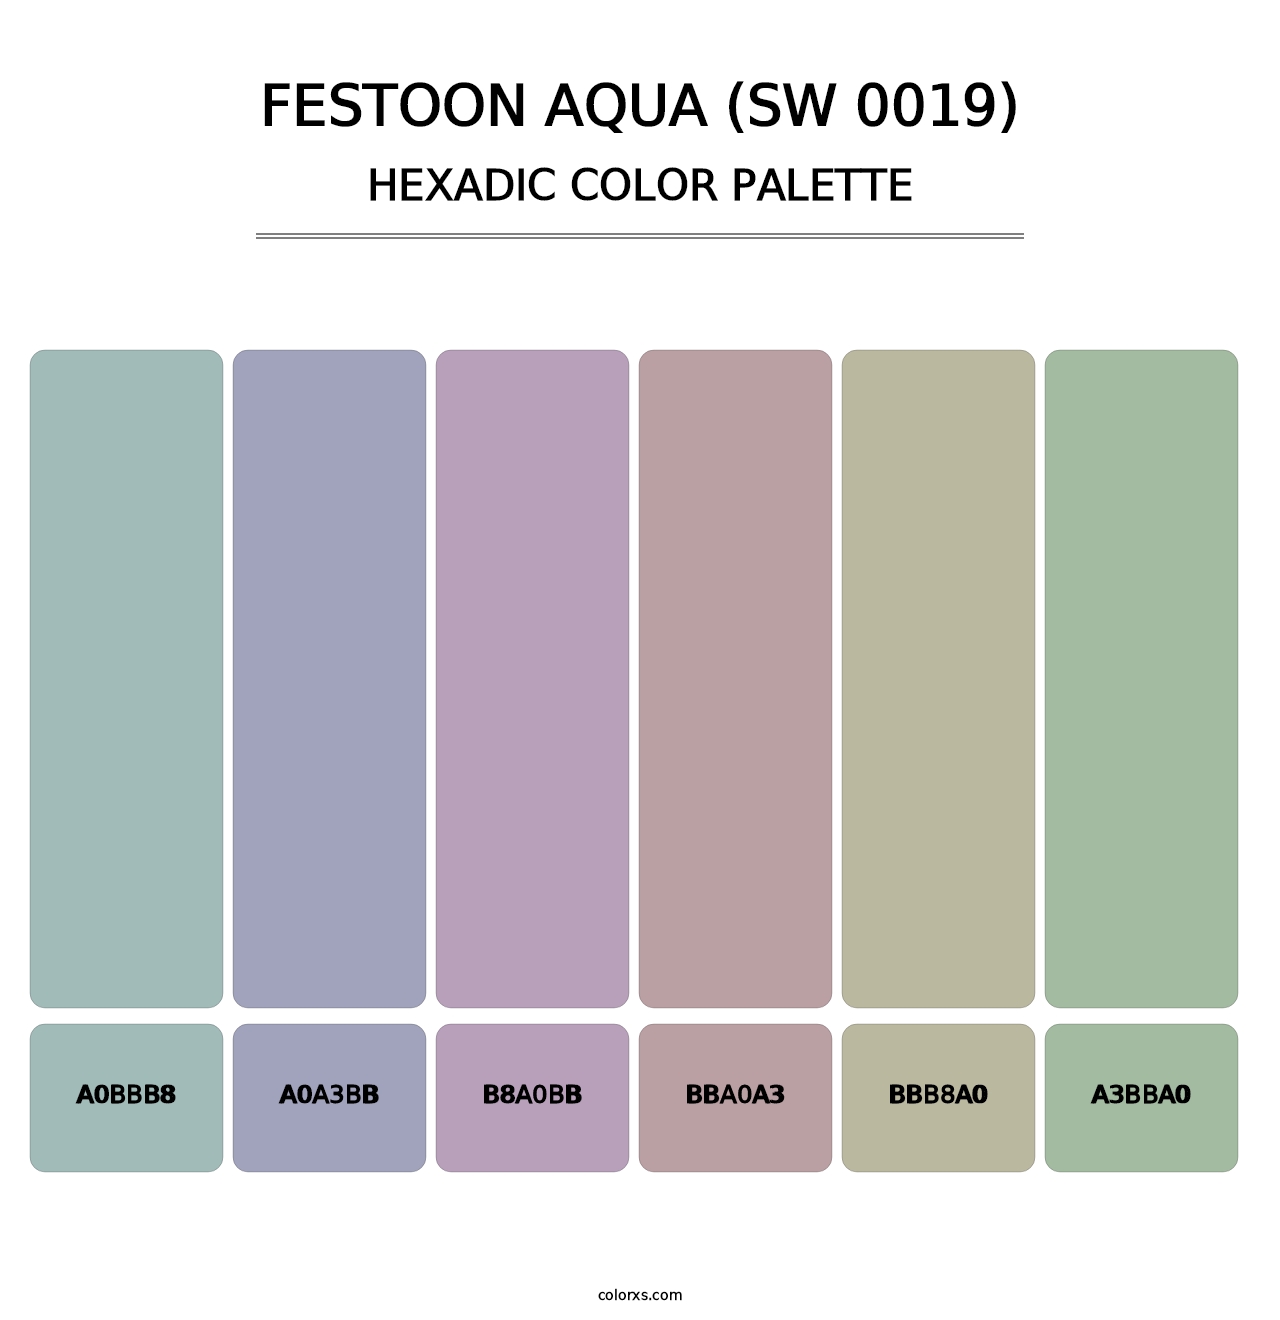 Festoon Aqua (SW 0019) - Hexadic Color Palette